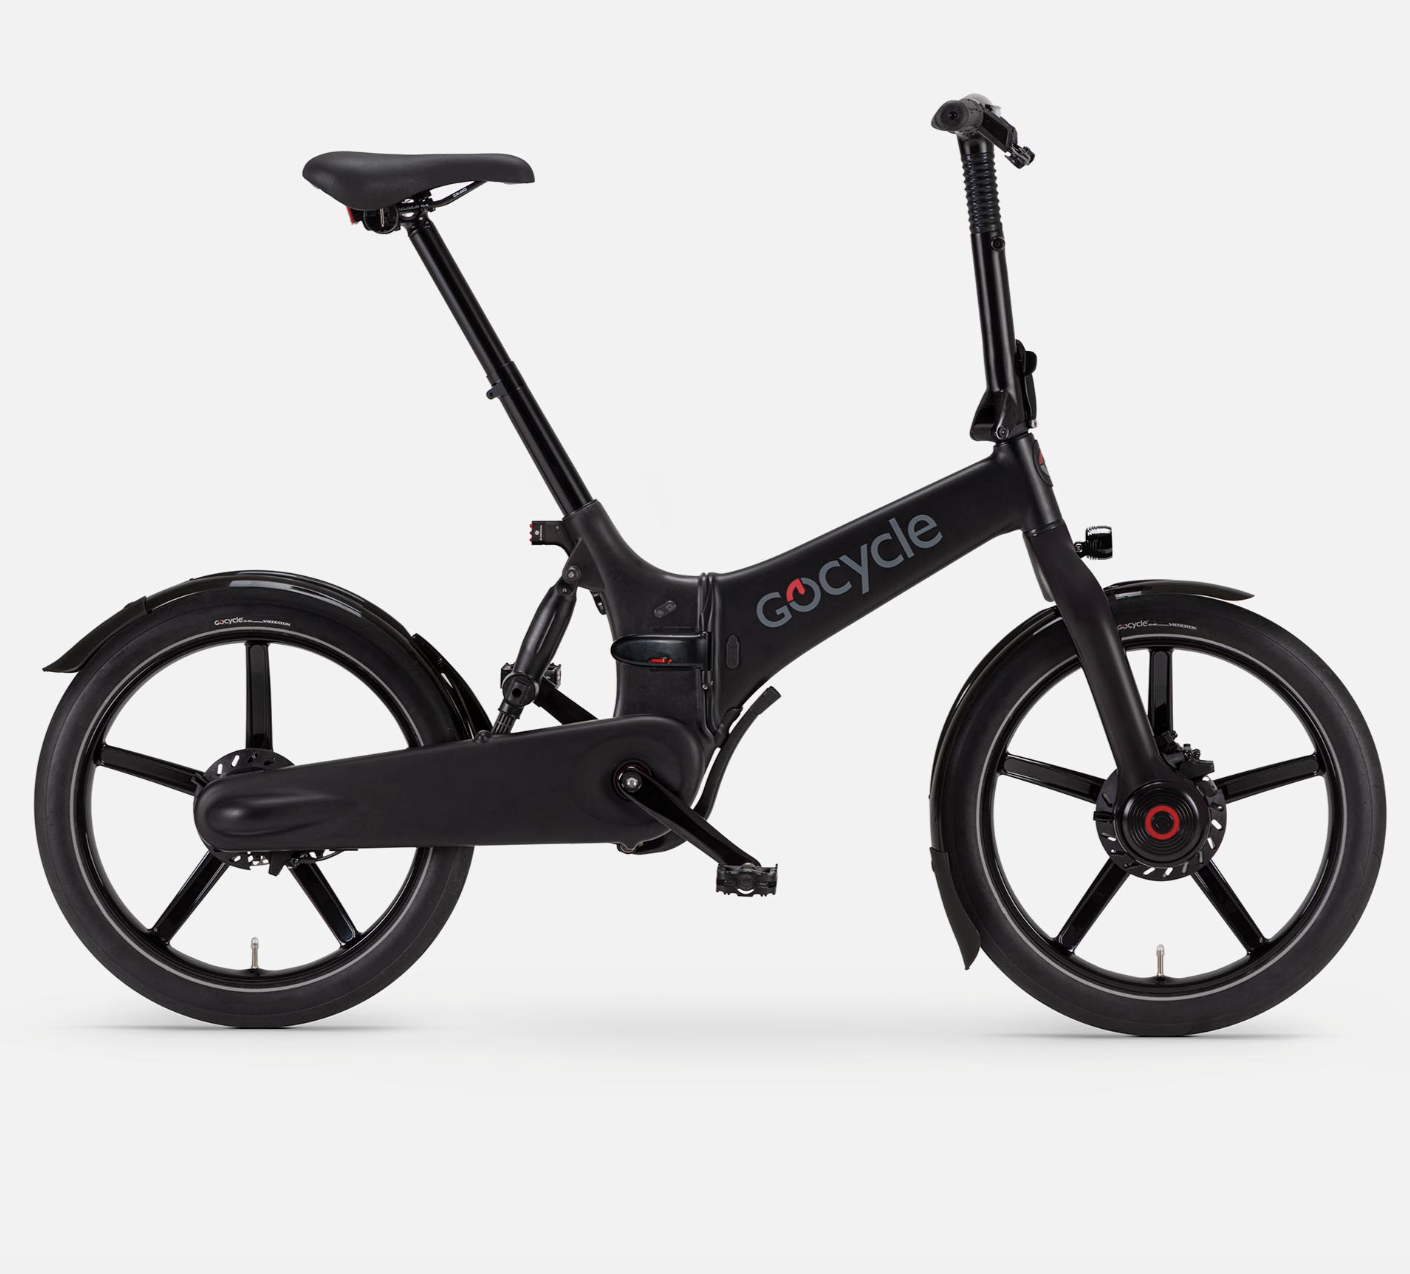 Gocycle G4i matt black electric folding bike